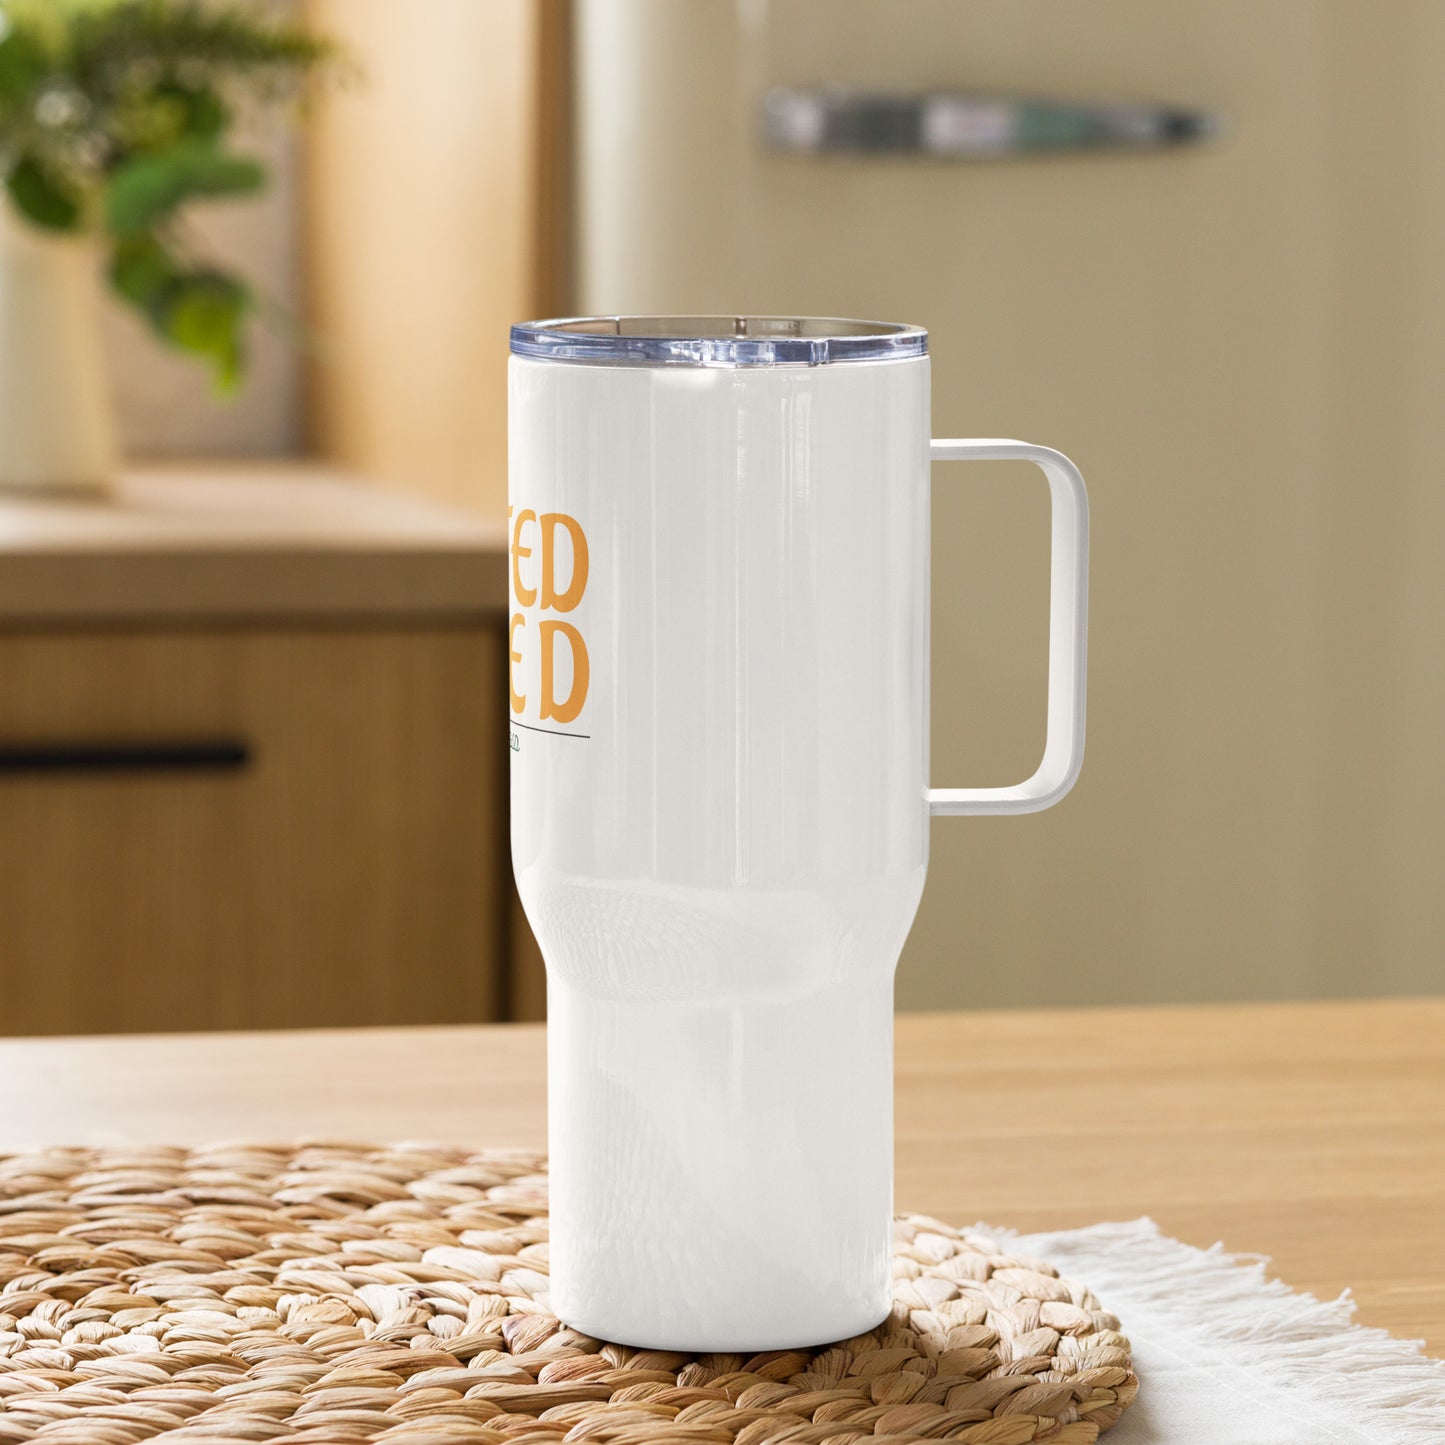 Tested & Tried Travel mug with a handle